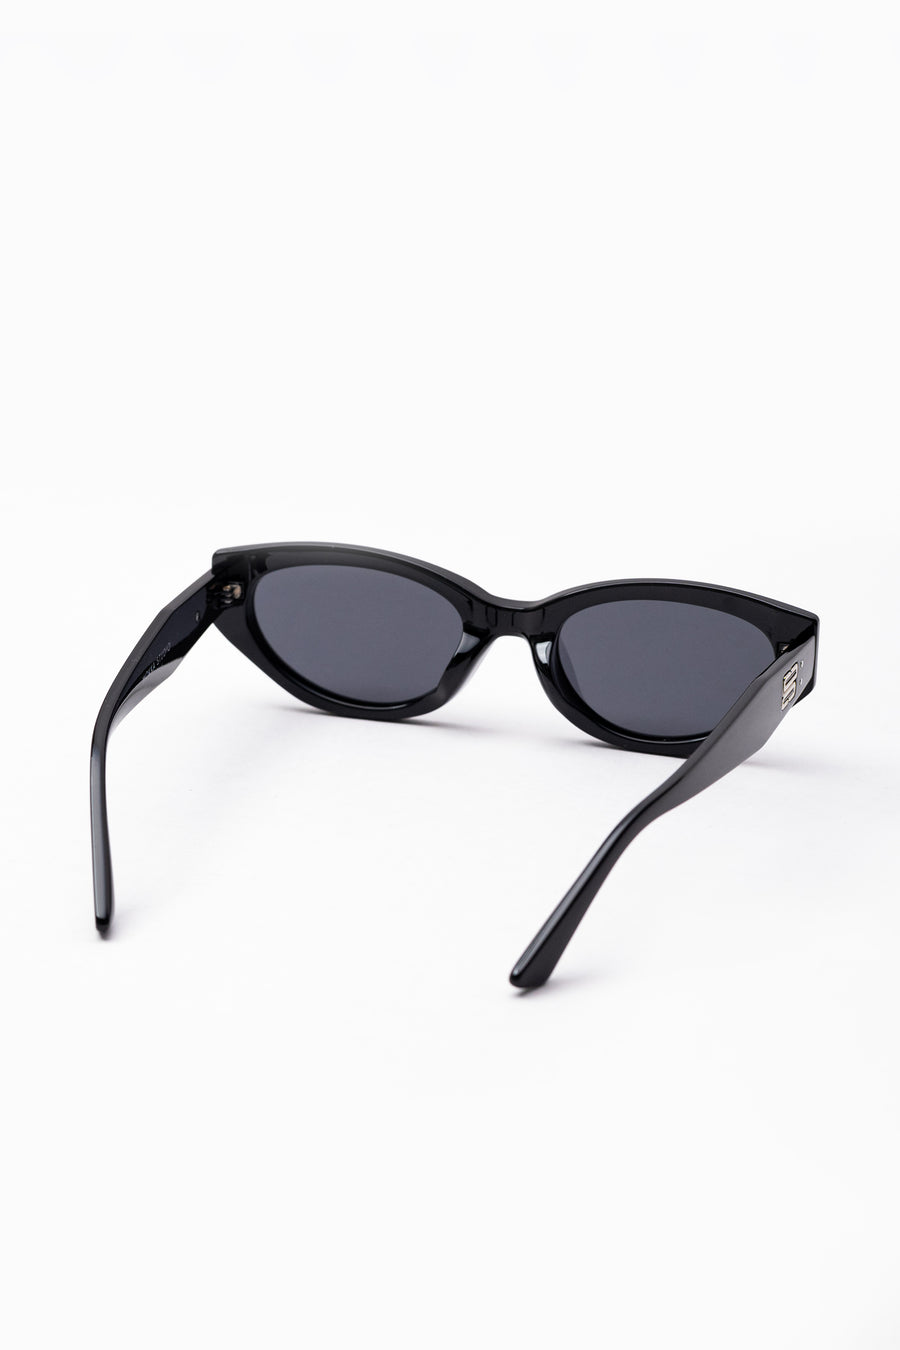 Rodney Sunglasses Black/Smoke Lens